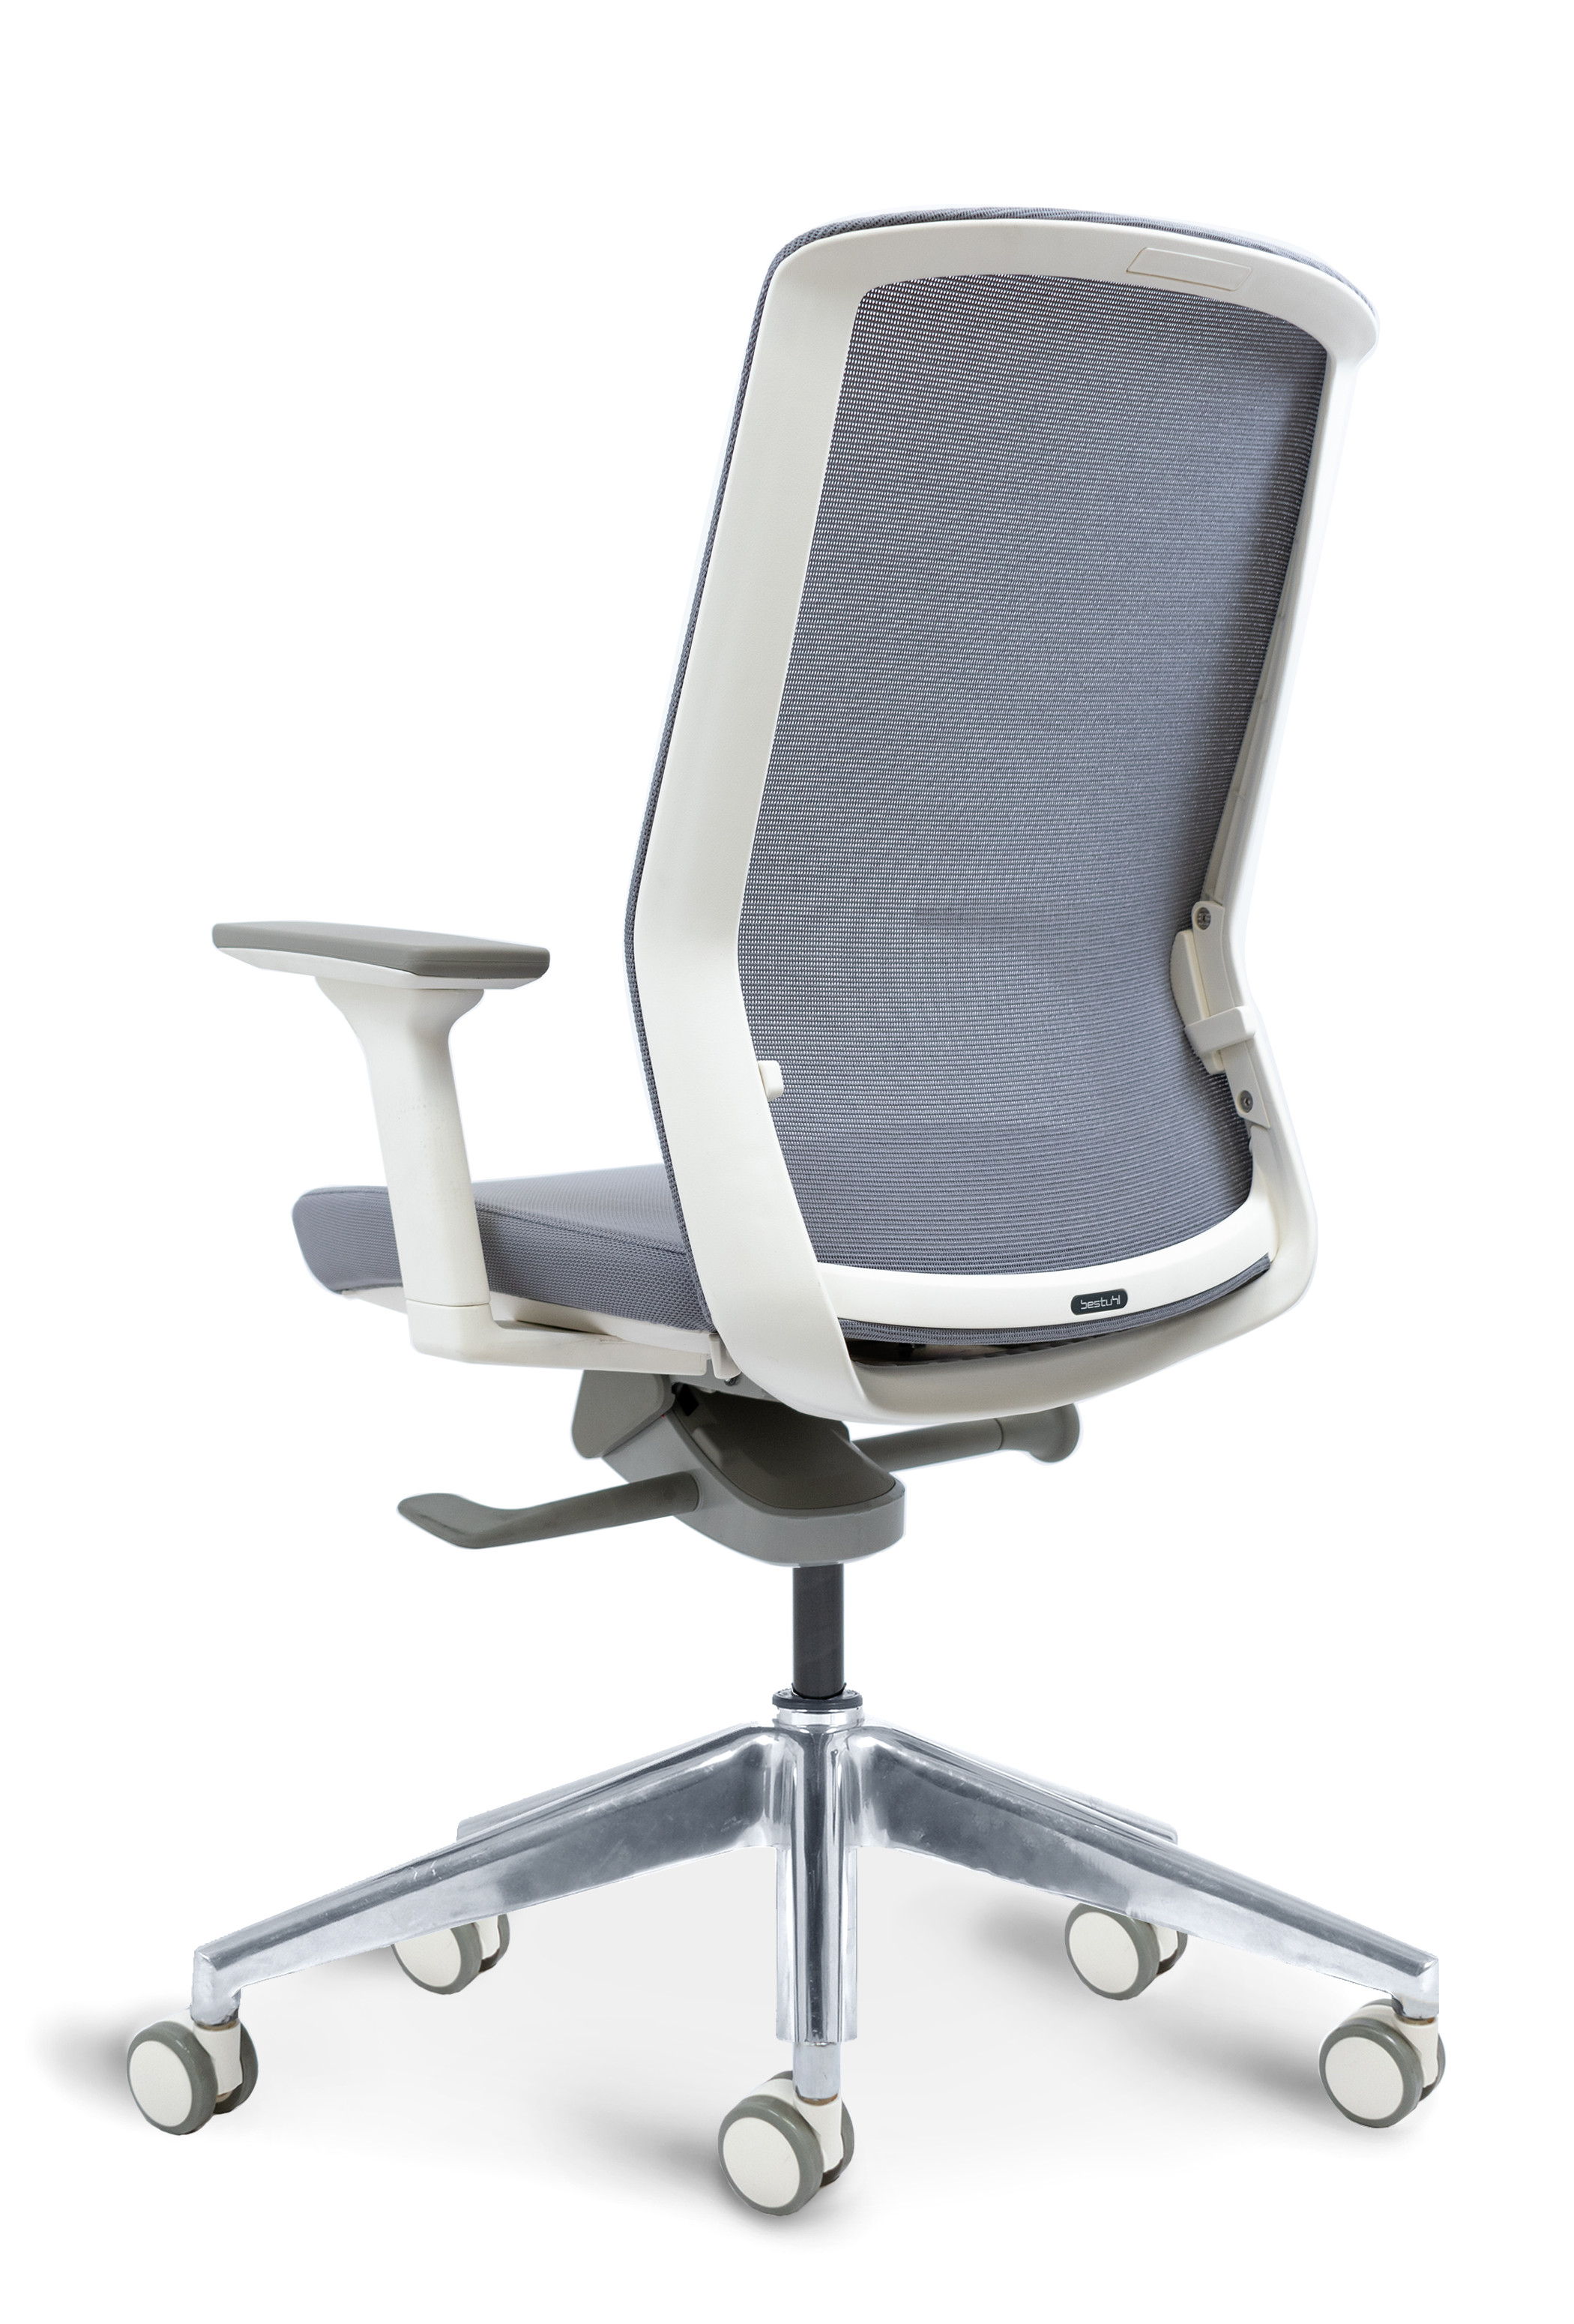 WS - J1 task chair - White (Back Angle)